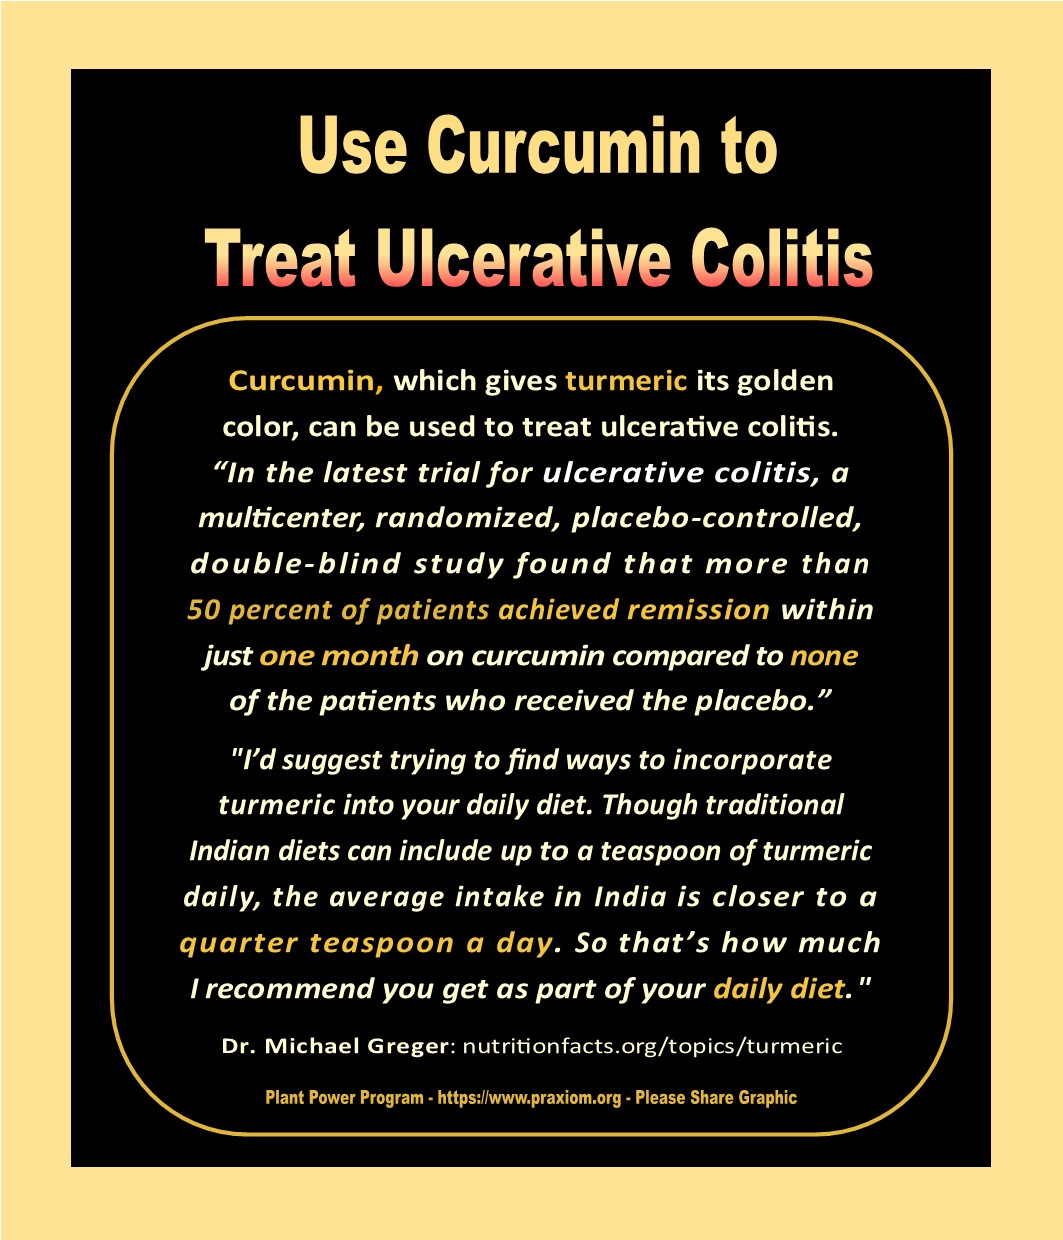 Use Curcumin to Treat Ulcerative Colitis - Dr. Michael Greger